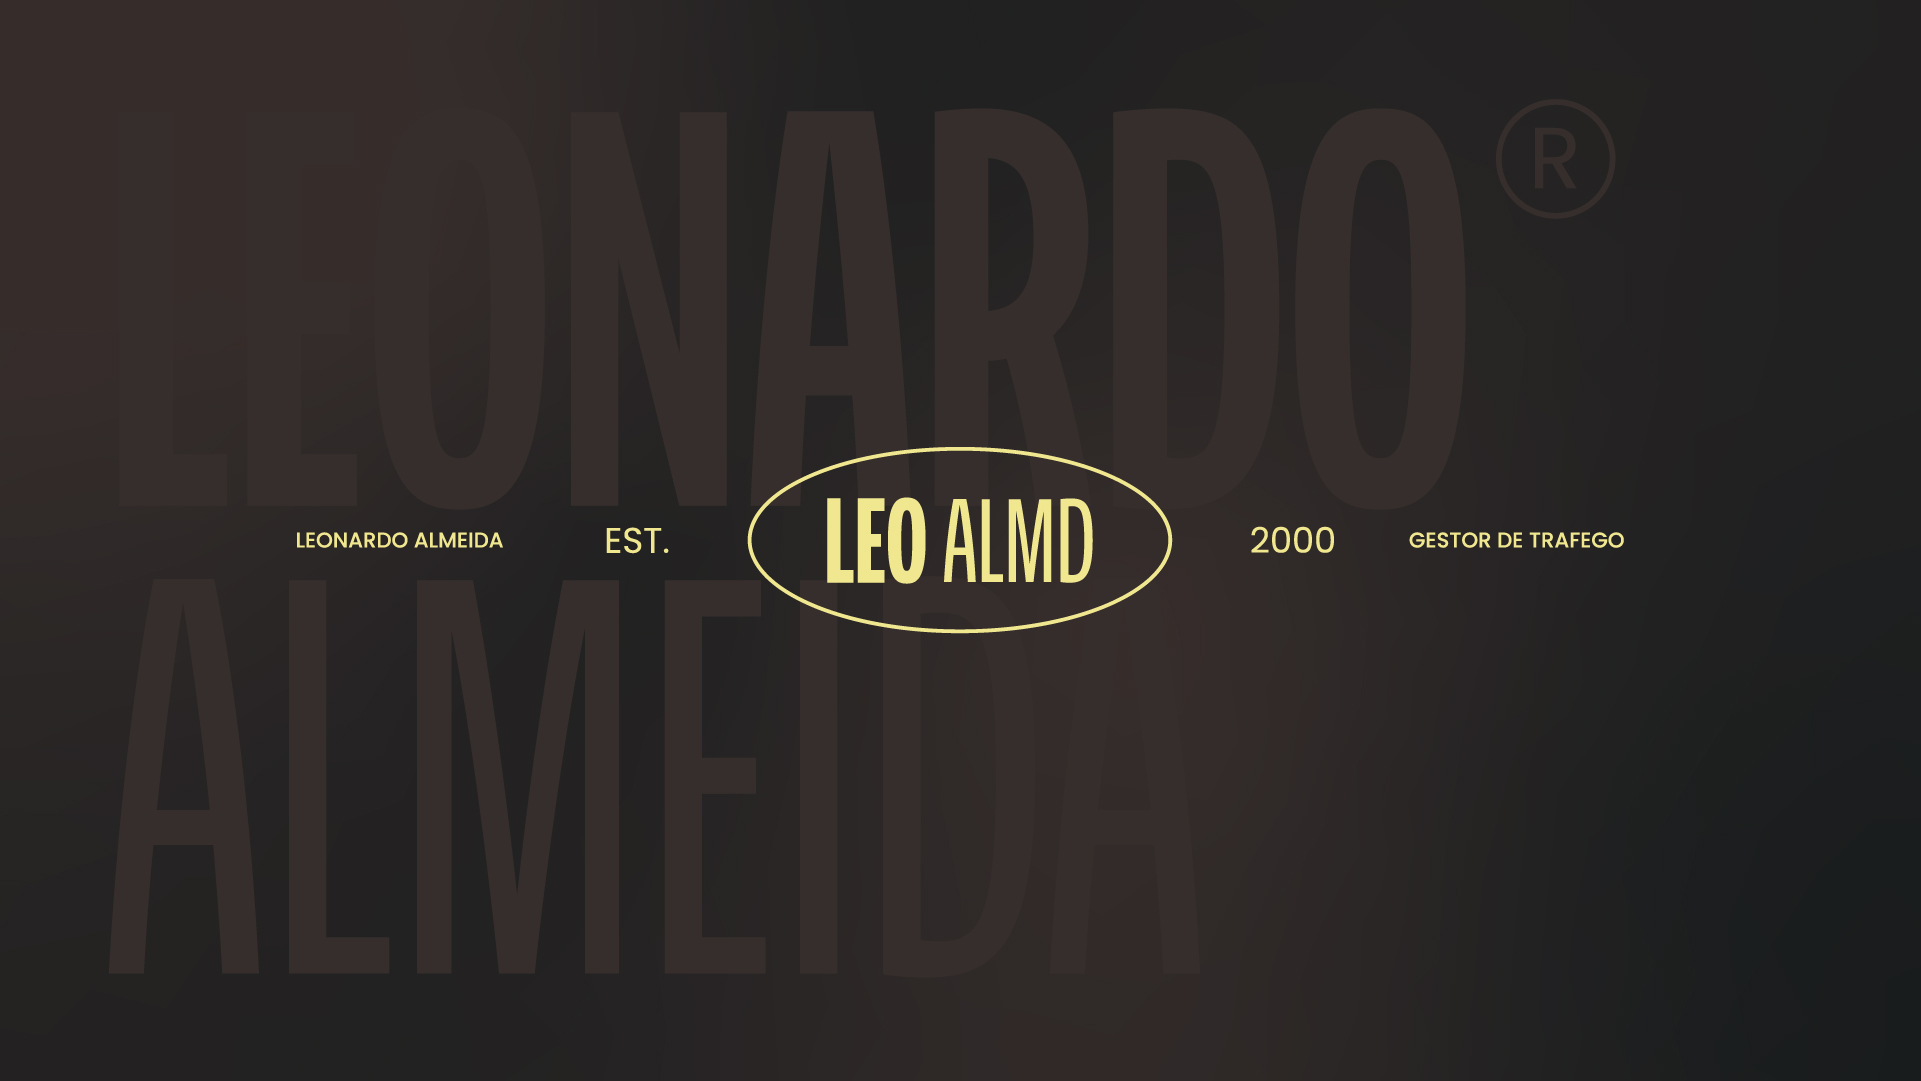 Caio Antoniolli’s Helps Leonardo Almeida Reach the Reference Position Through Brand Narratives